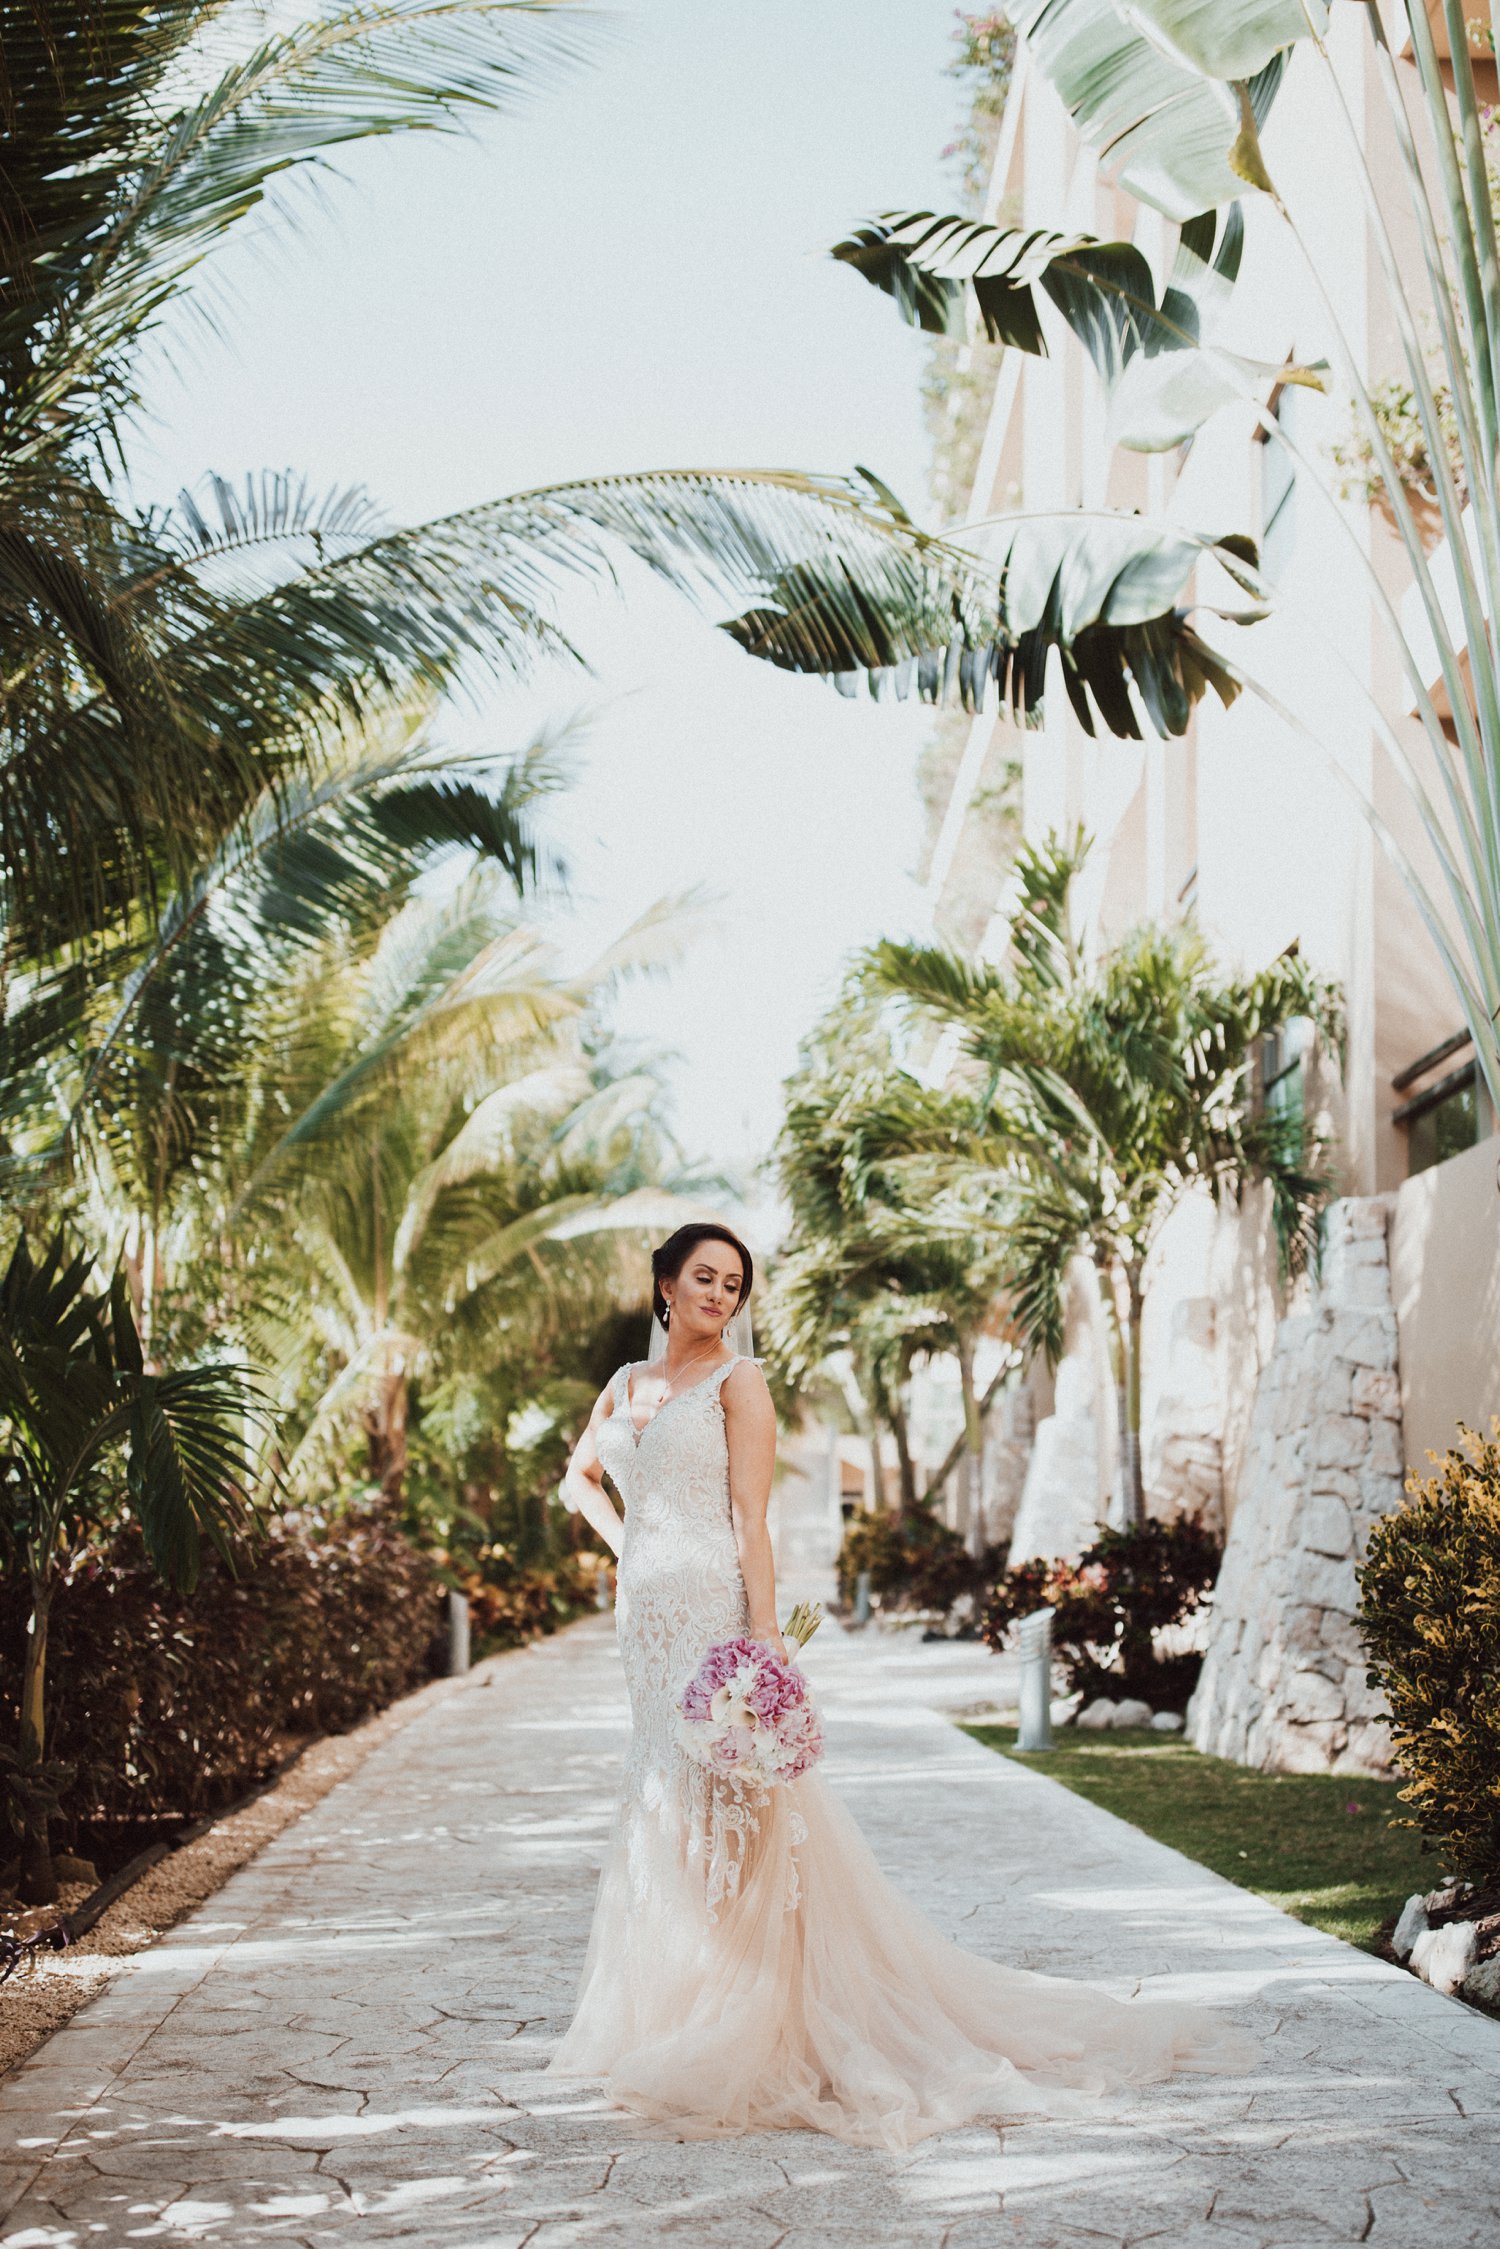  images by feliciathephotographer.com | destination wedding photographer | el dorado riviera maya | glamorous | beachside | resort | bride | beaded dress | pearl edged veil | pink and white bouquet | tropical | candid | allure | 